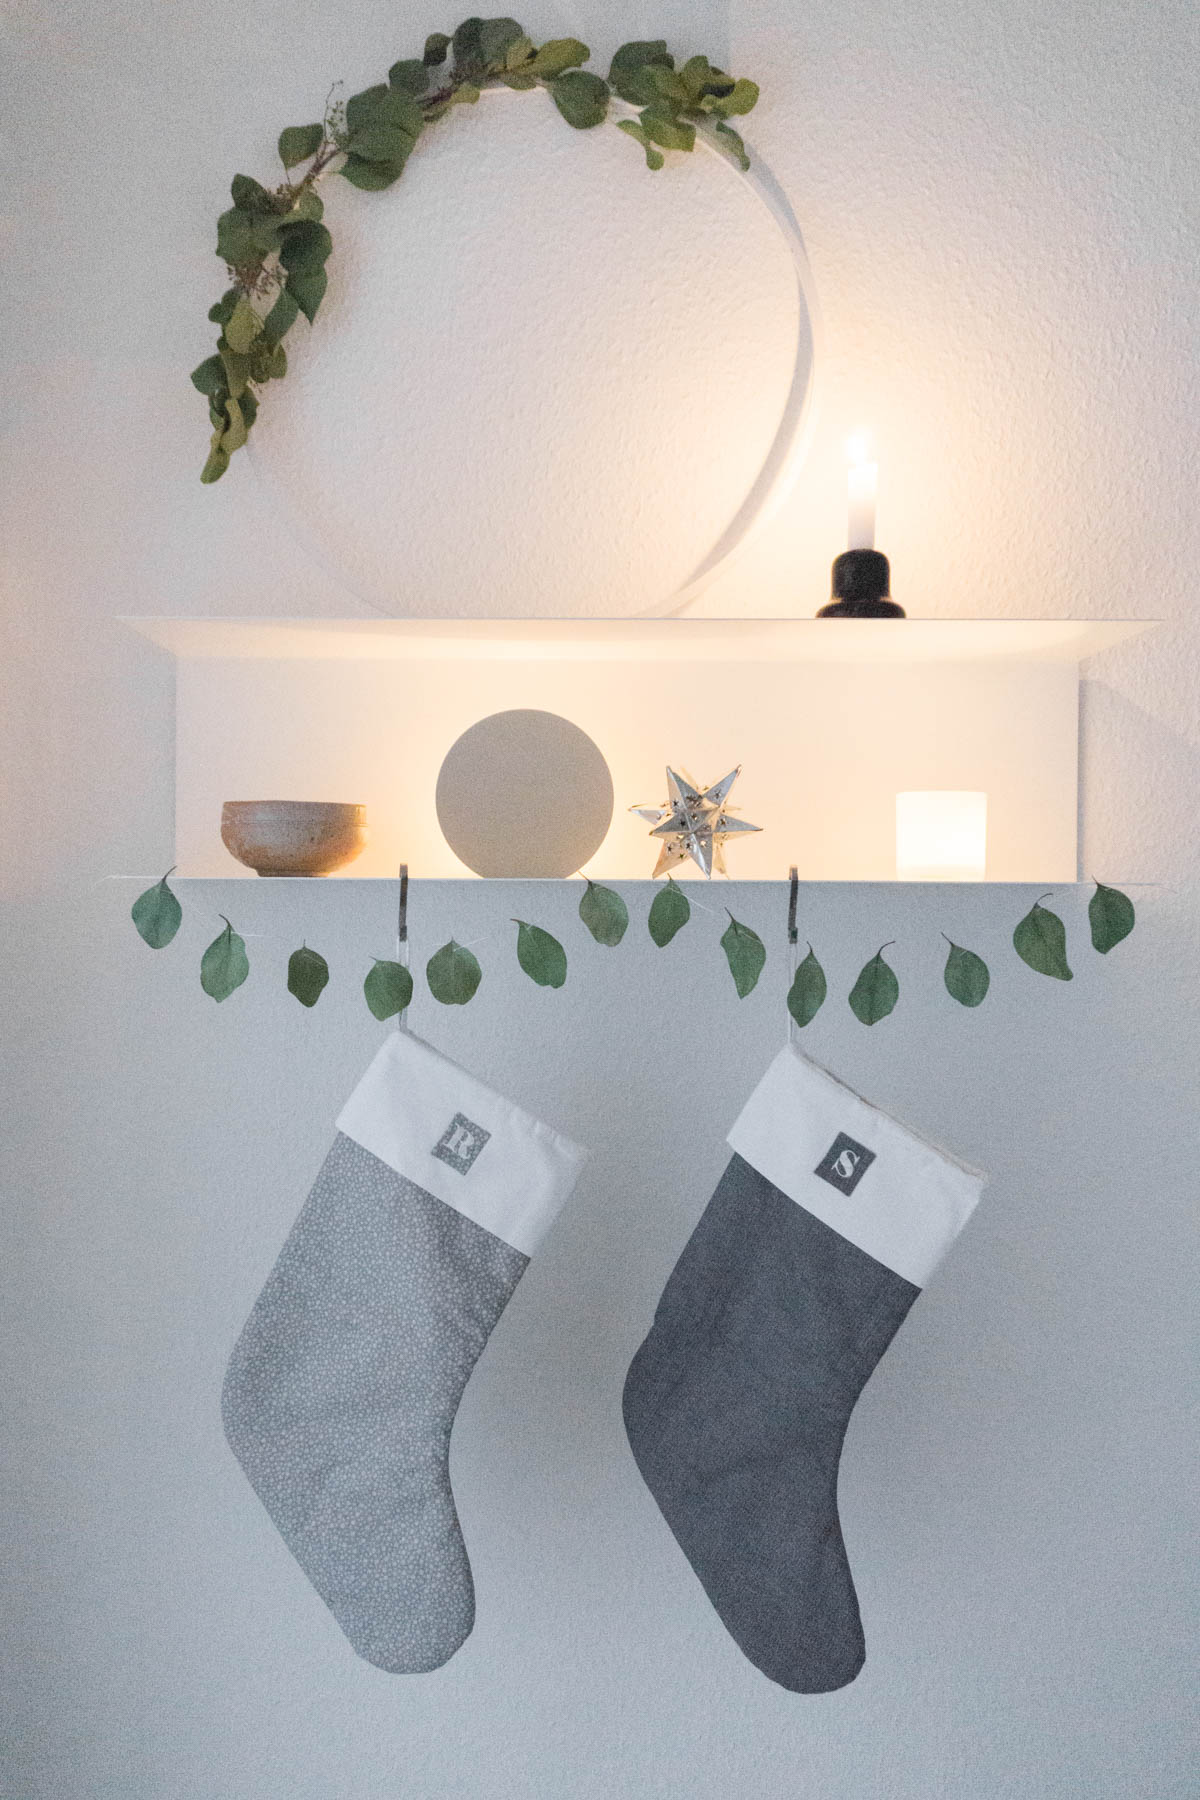 Scandinavian Christmas Decor, Grey Stockings - RG Daily Blog